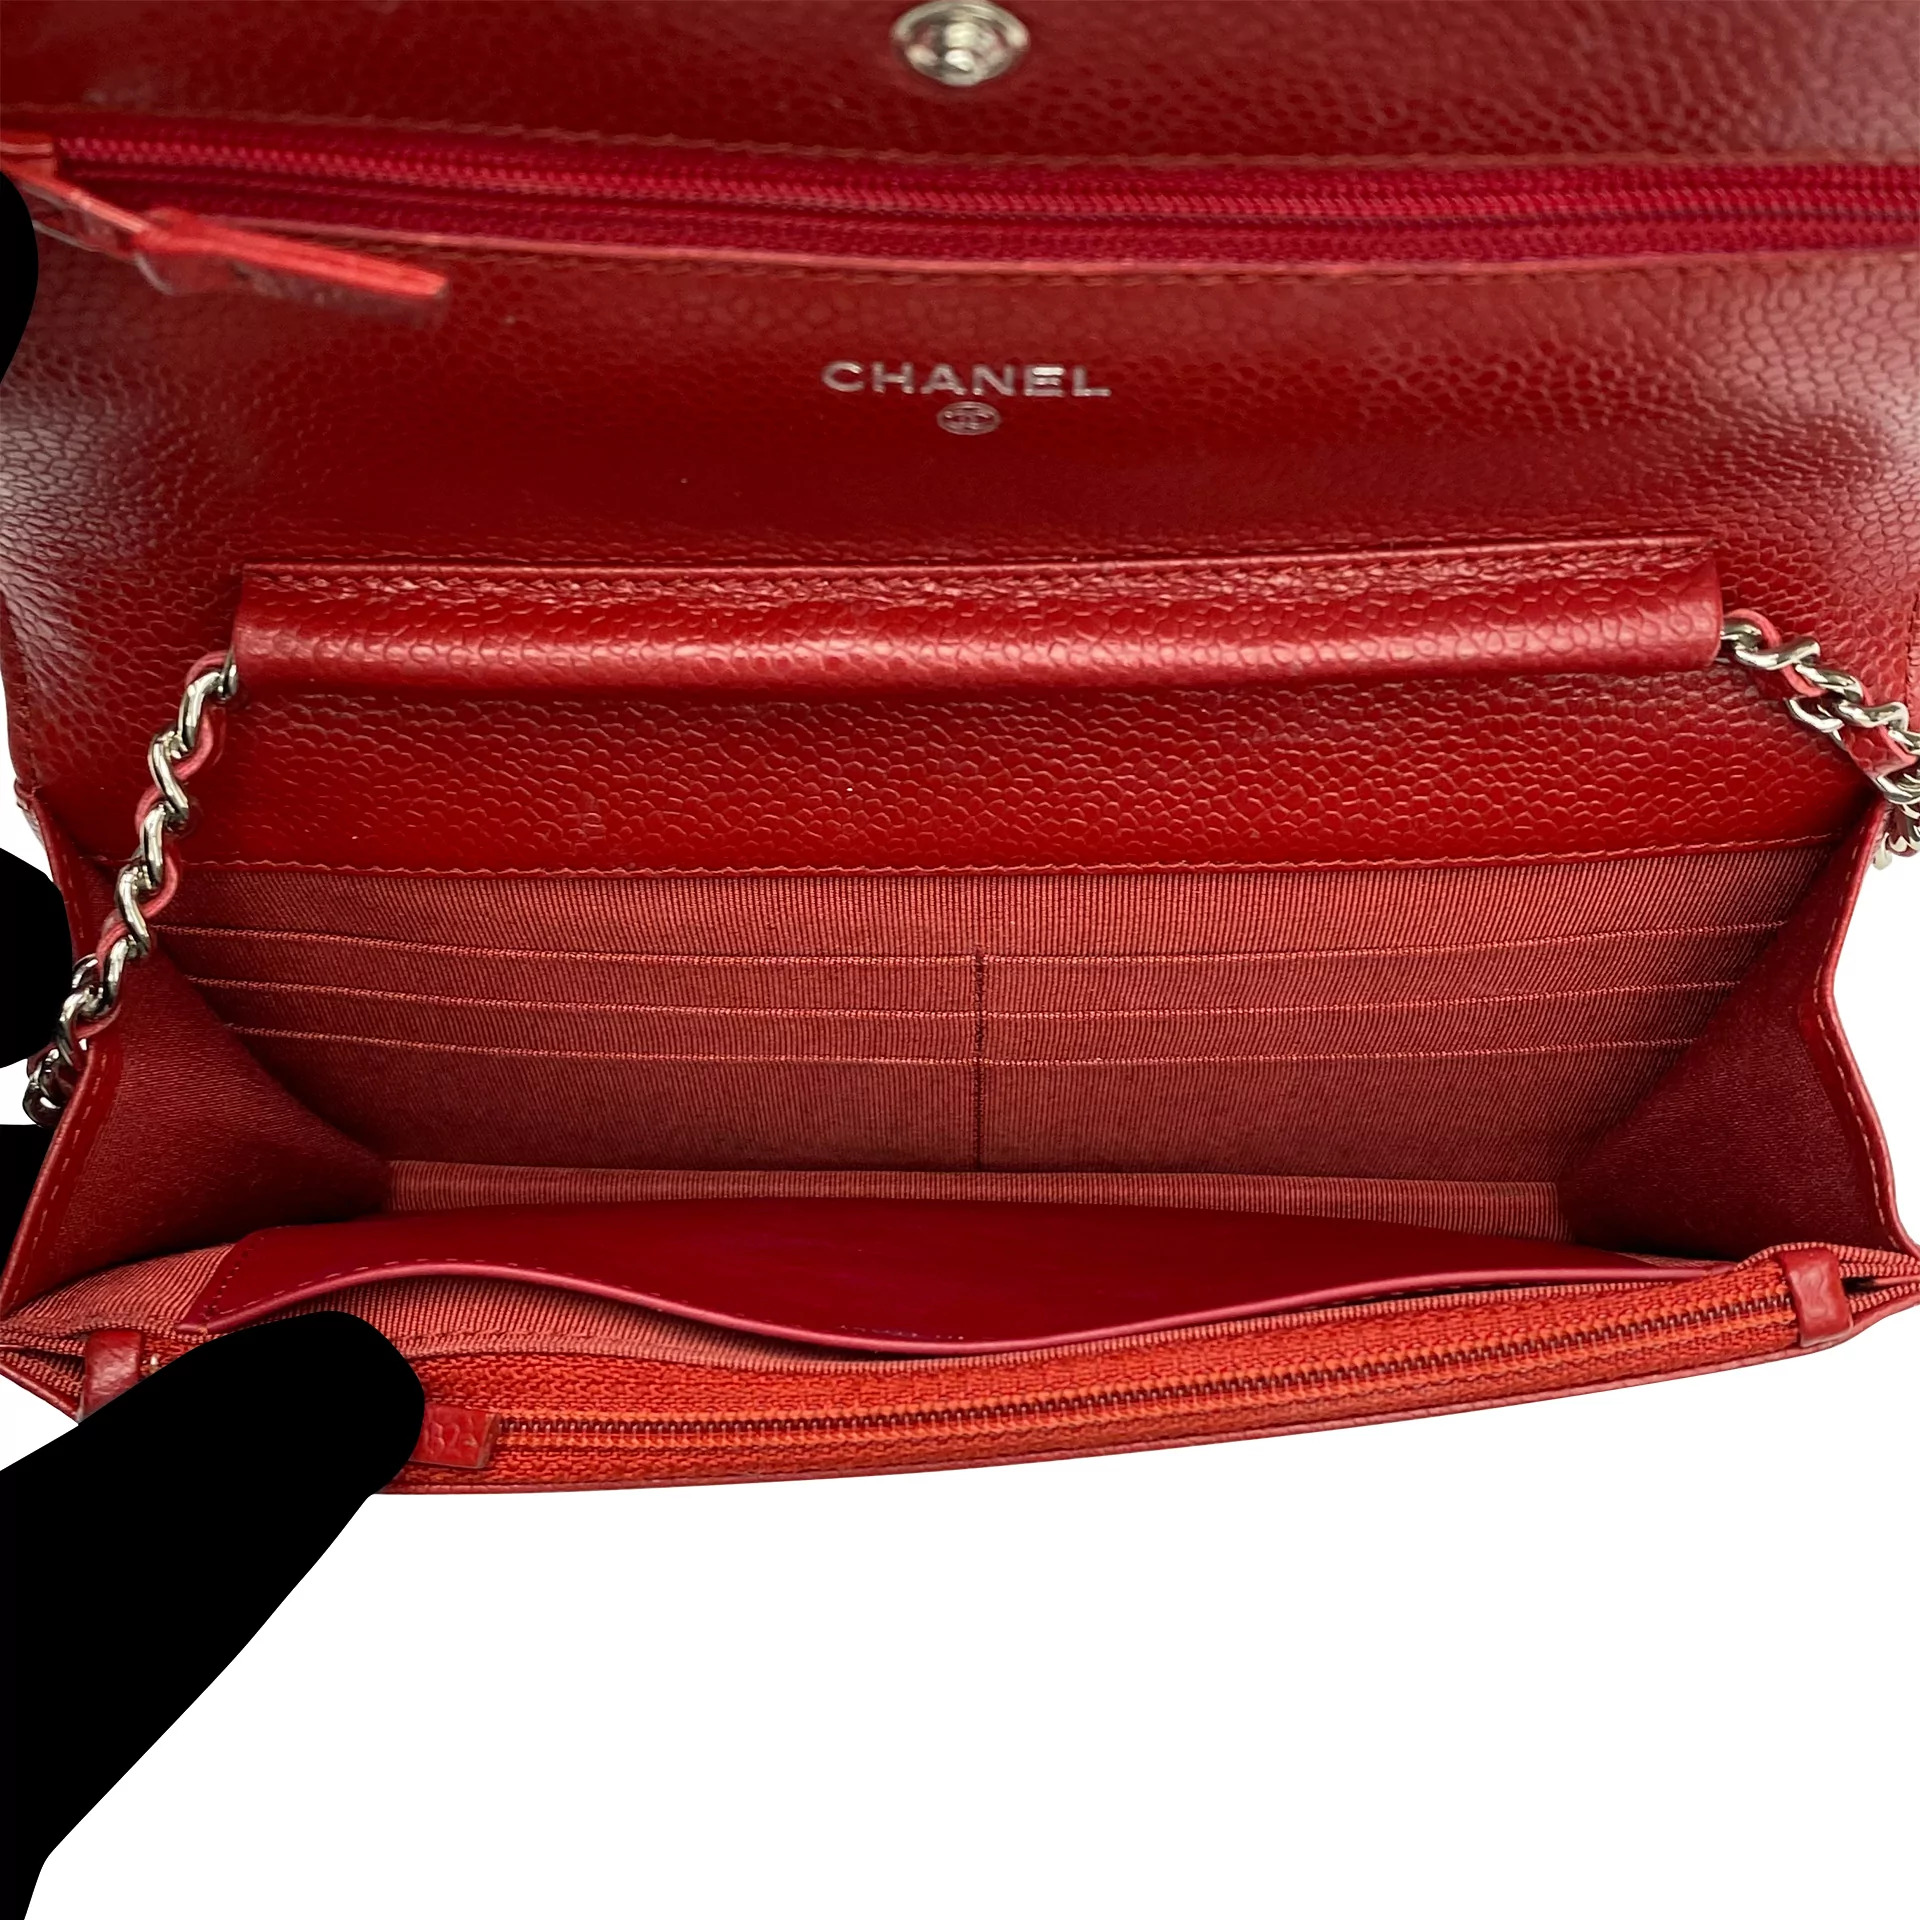 Bolsa Chanel Woc Vermelha